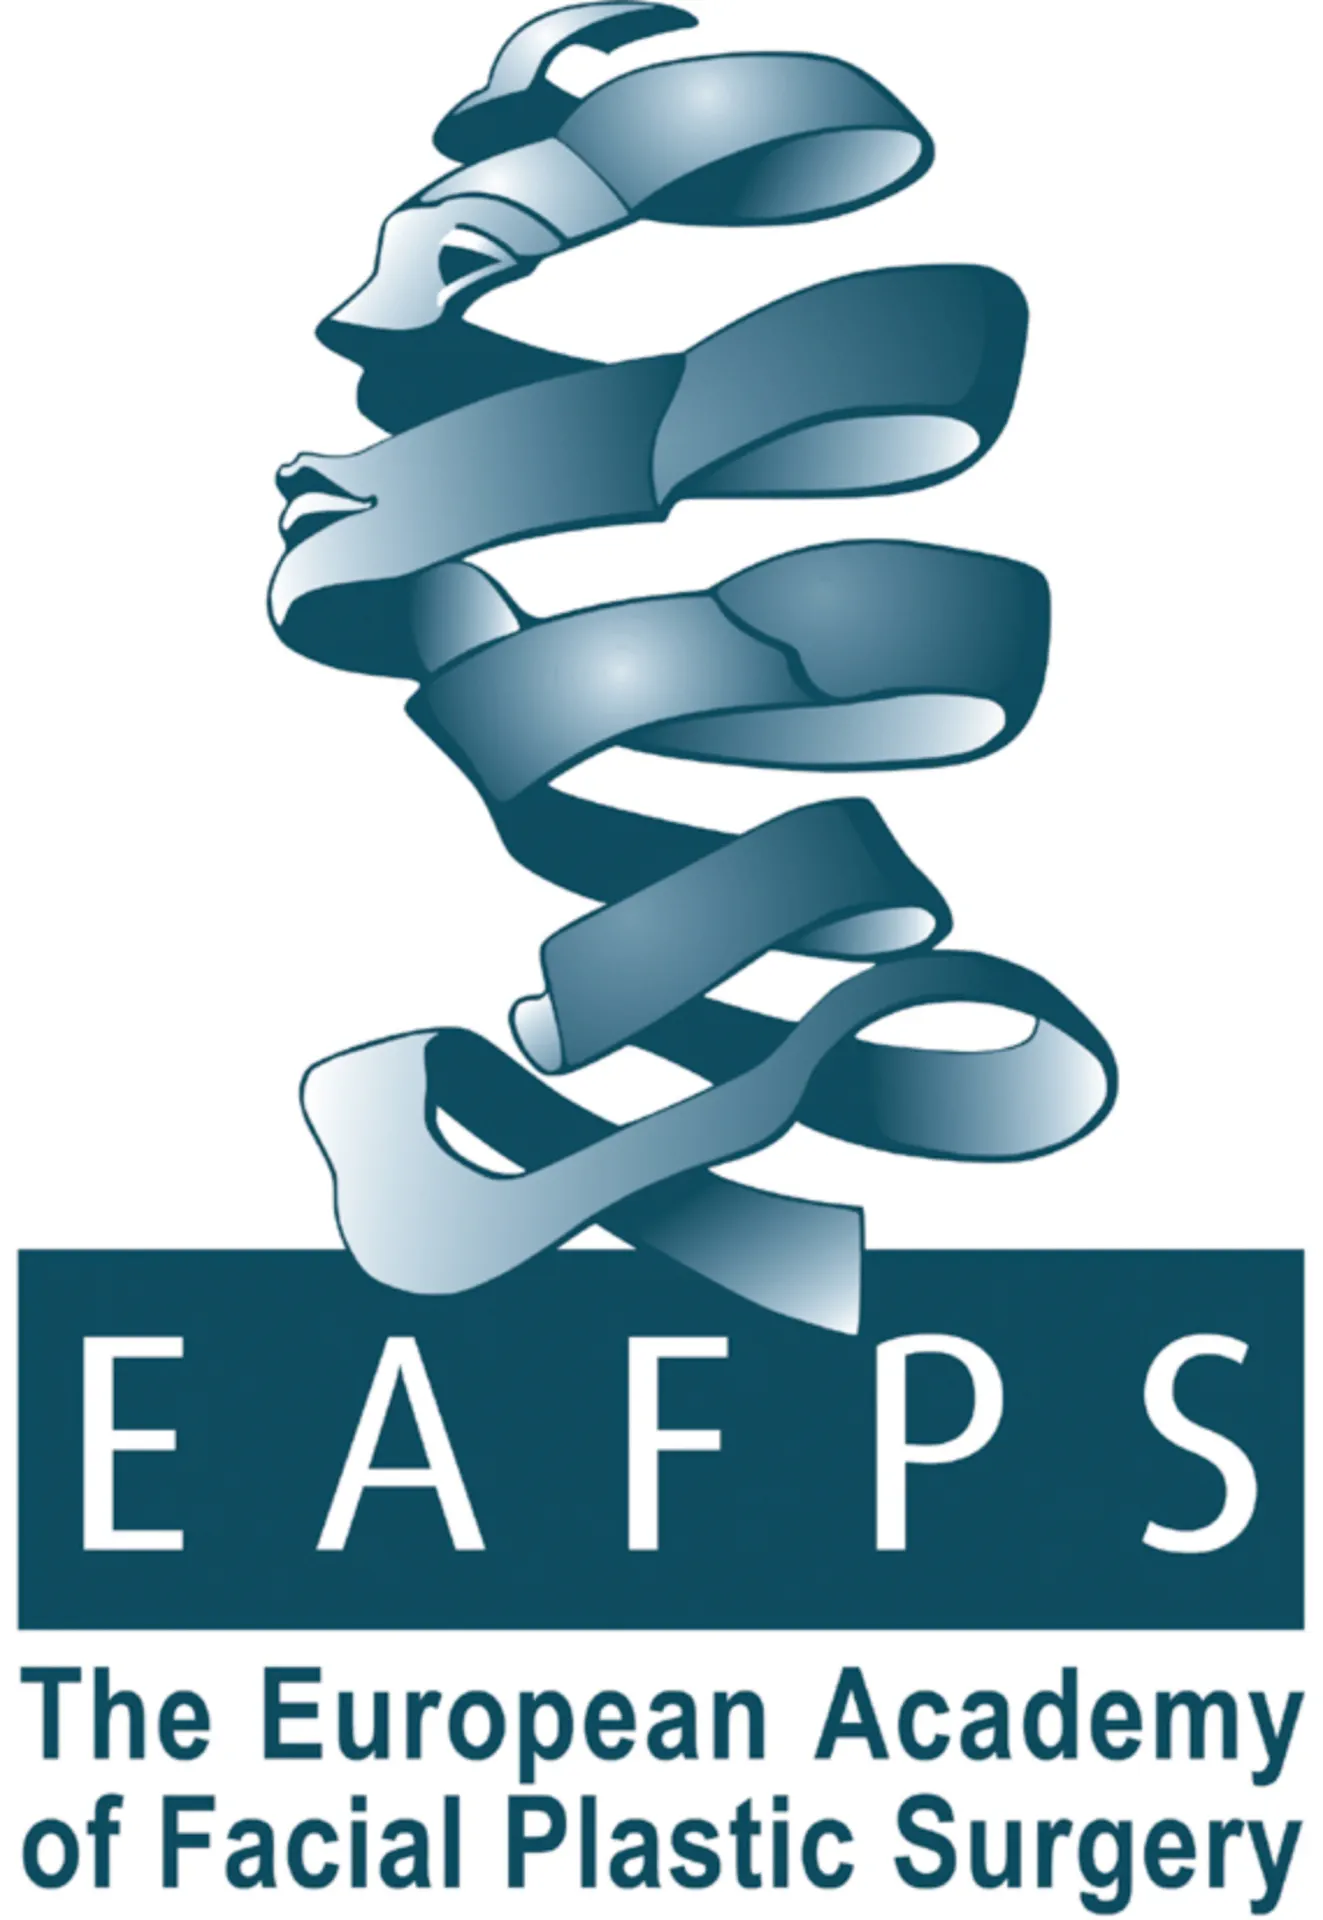 eafps logo 300dpi rgb ergebnis